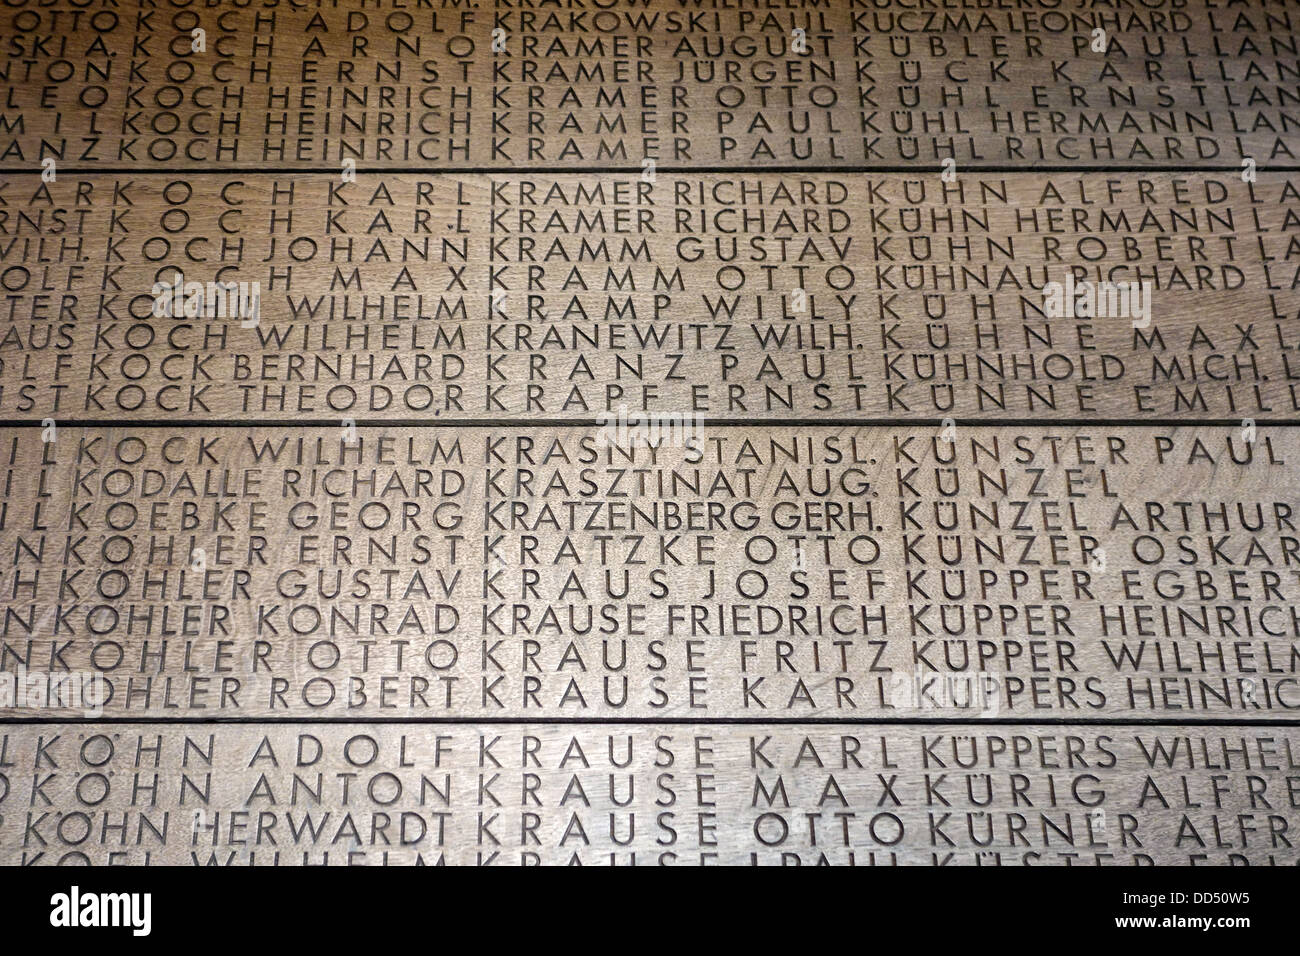 Namen der gefallenen German First World War One bei WW1 Deutscher Soldatenfriedhof Langemark / Studentenfriedhof, Belgien Stockfoto